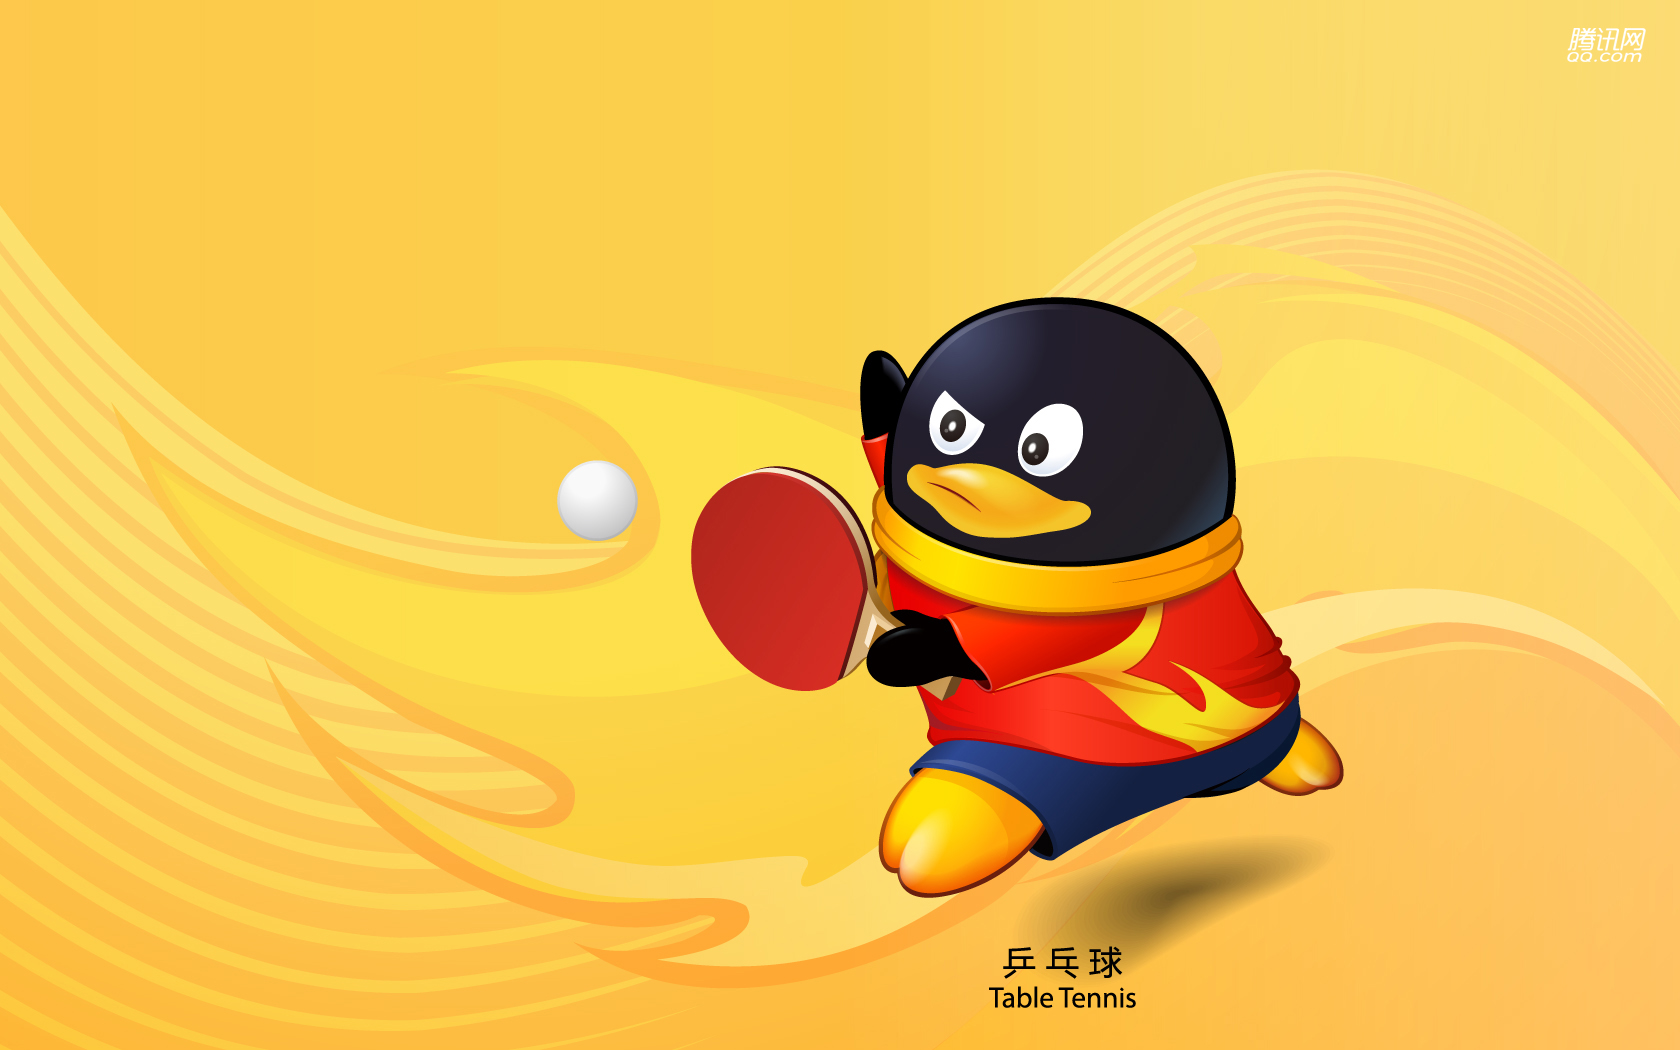 table tennis wallpaper,cartoon,animated cartoon,yellow,fictional character,illustration